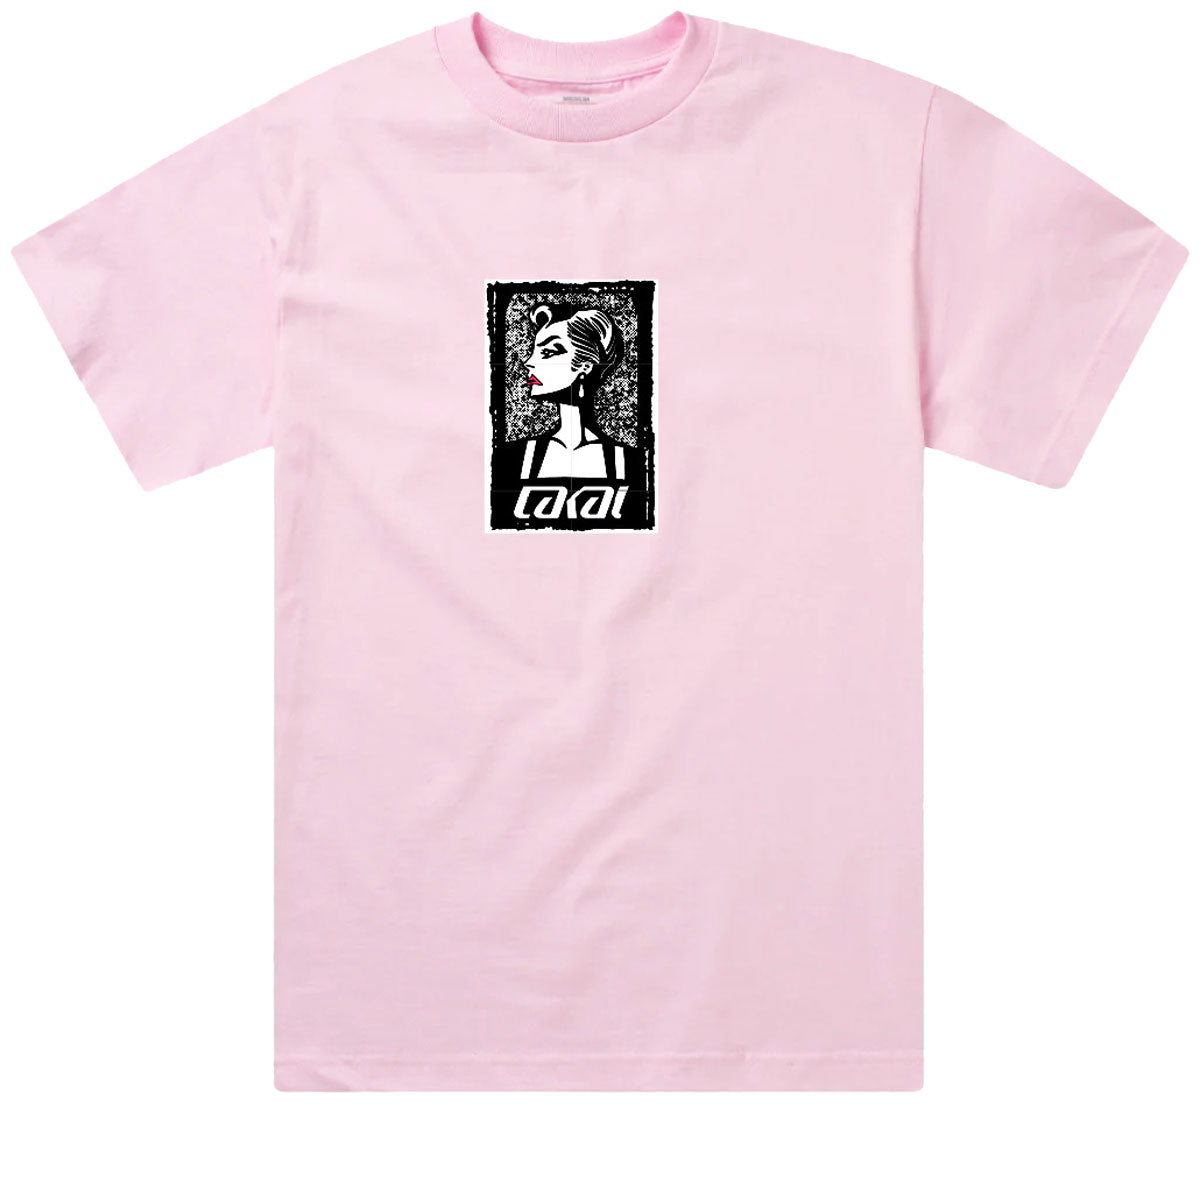 Lakai Nouveau T-Shirt - Pink image 1